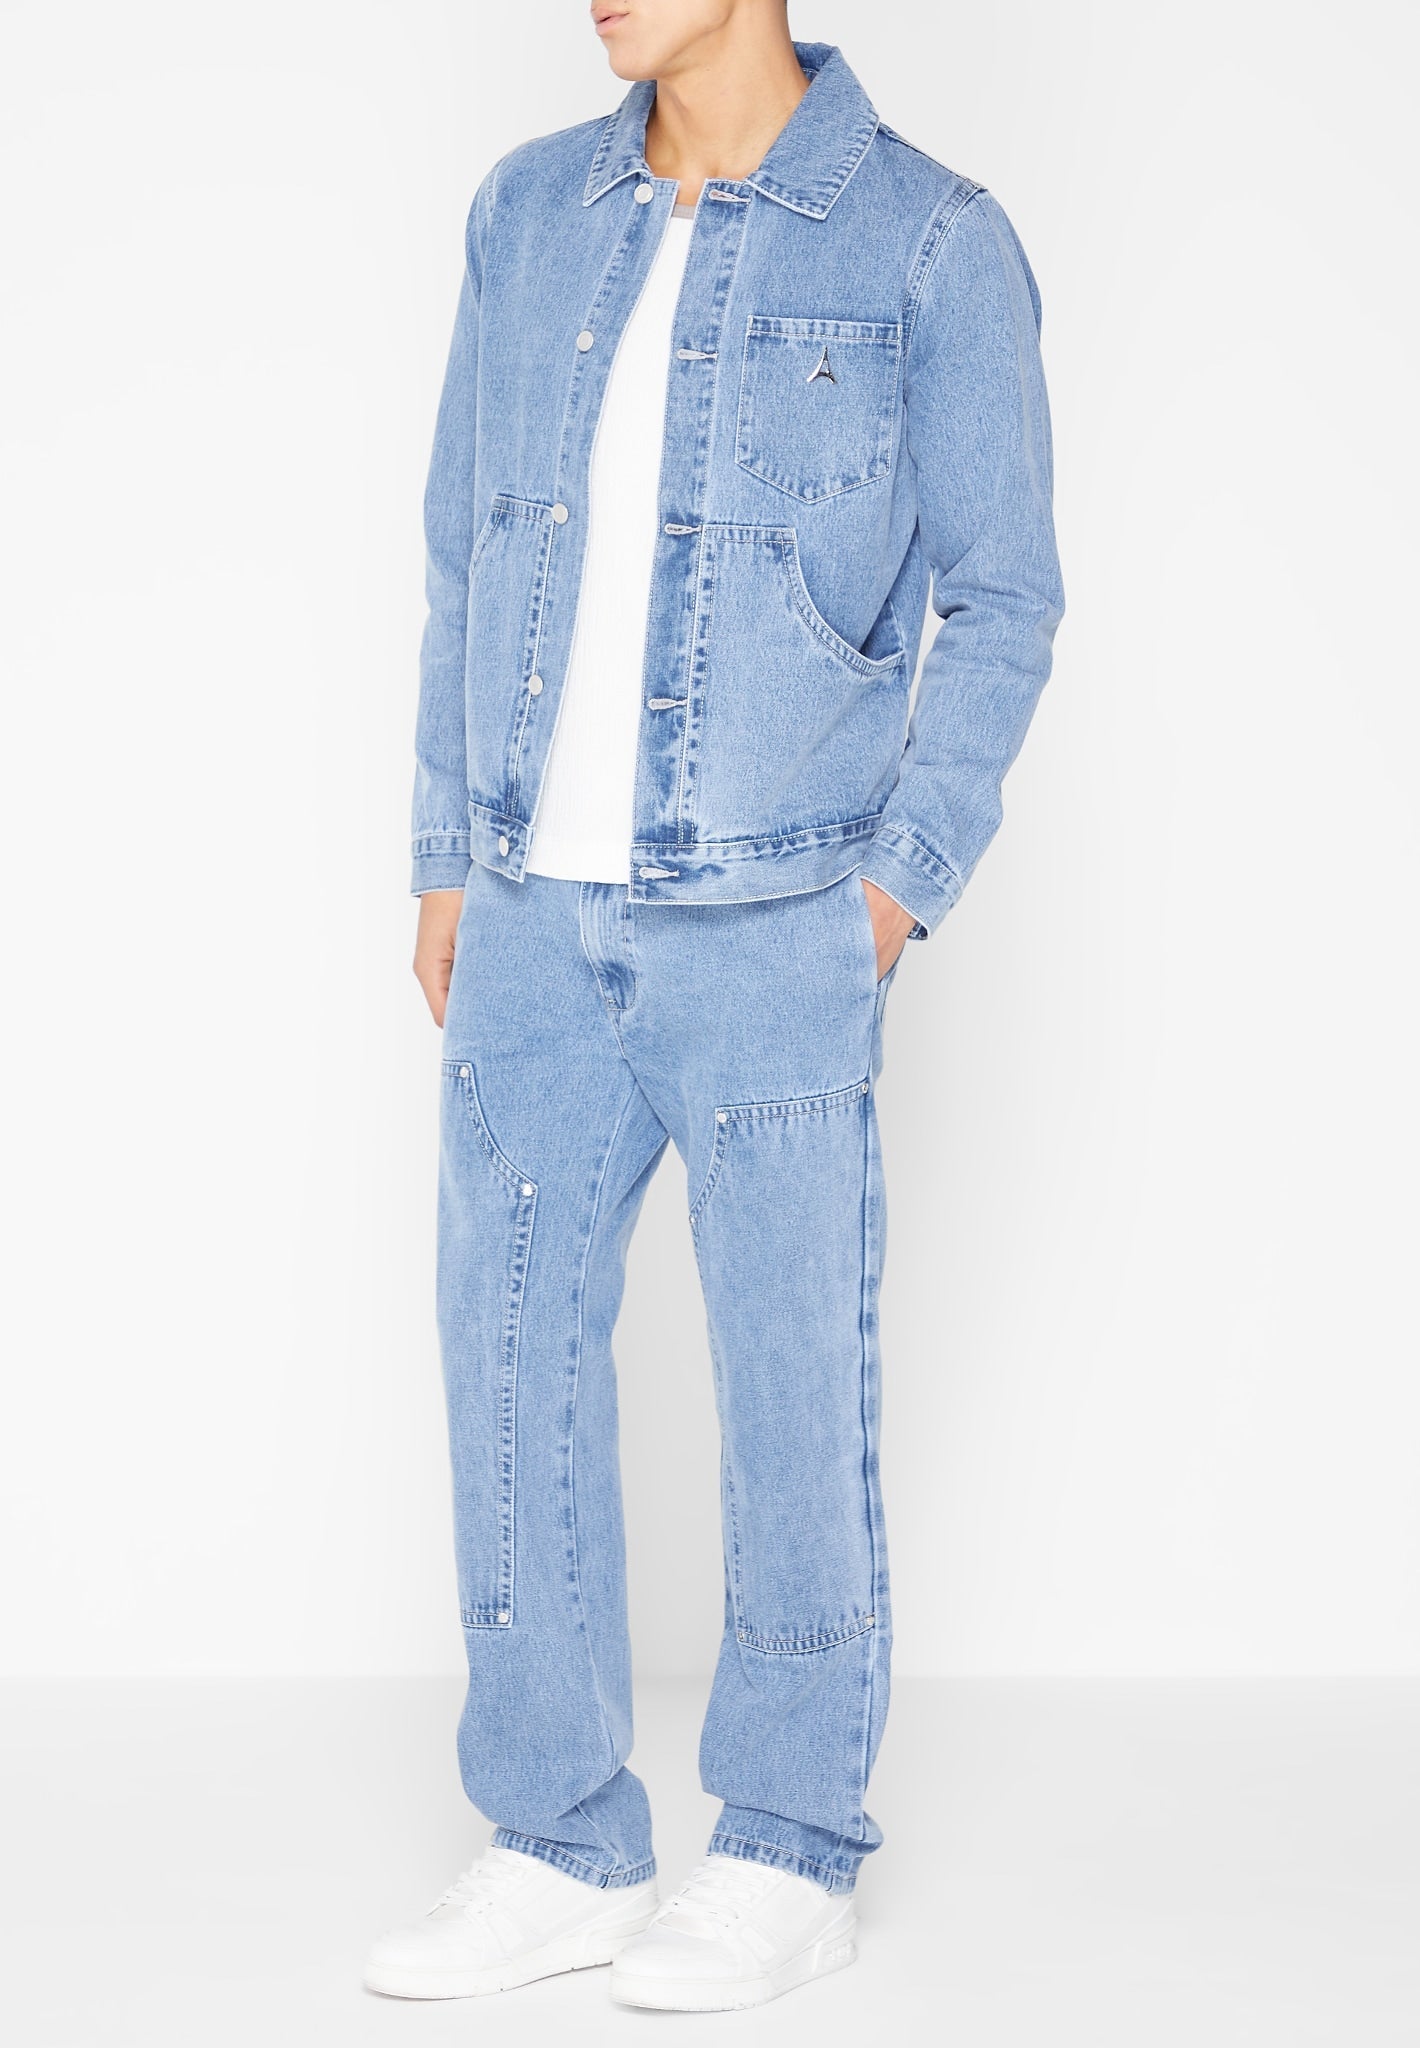 Zara - Carpenter Pocket Jeans - Light Blue - Men